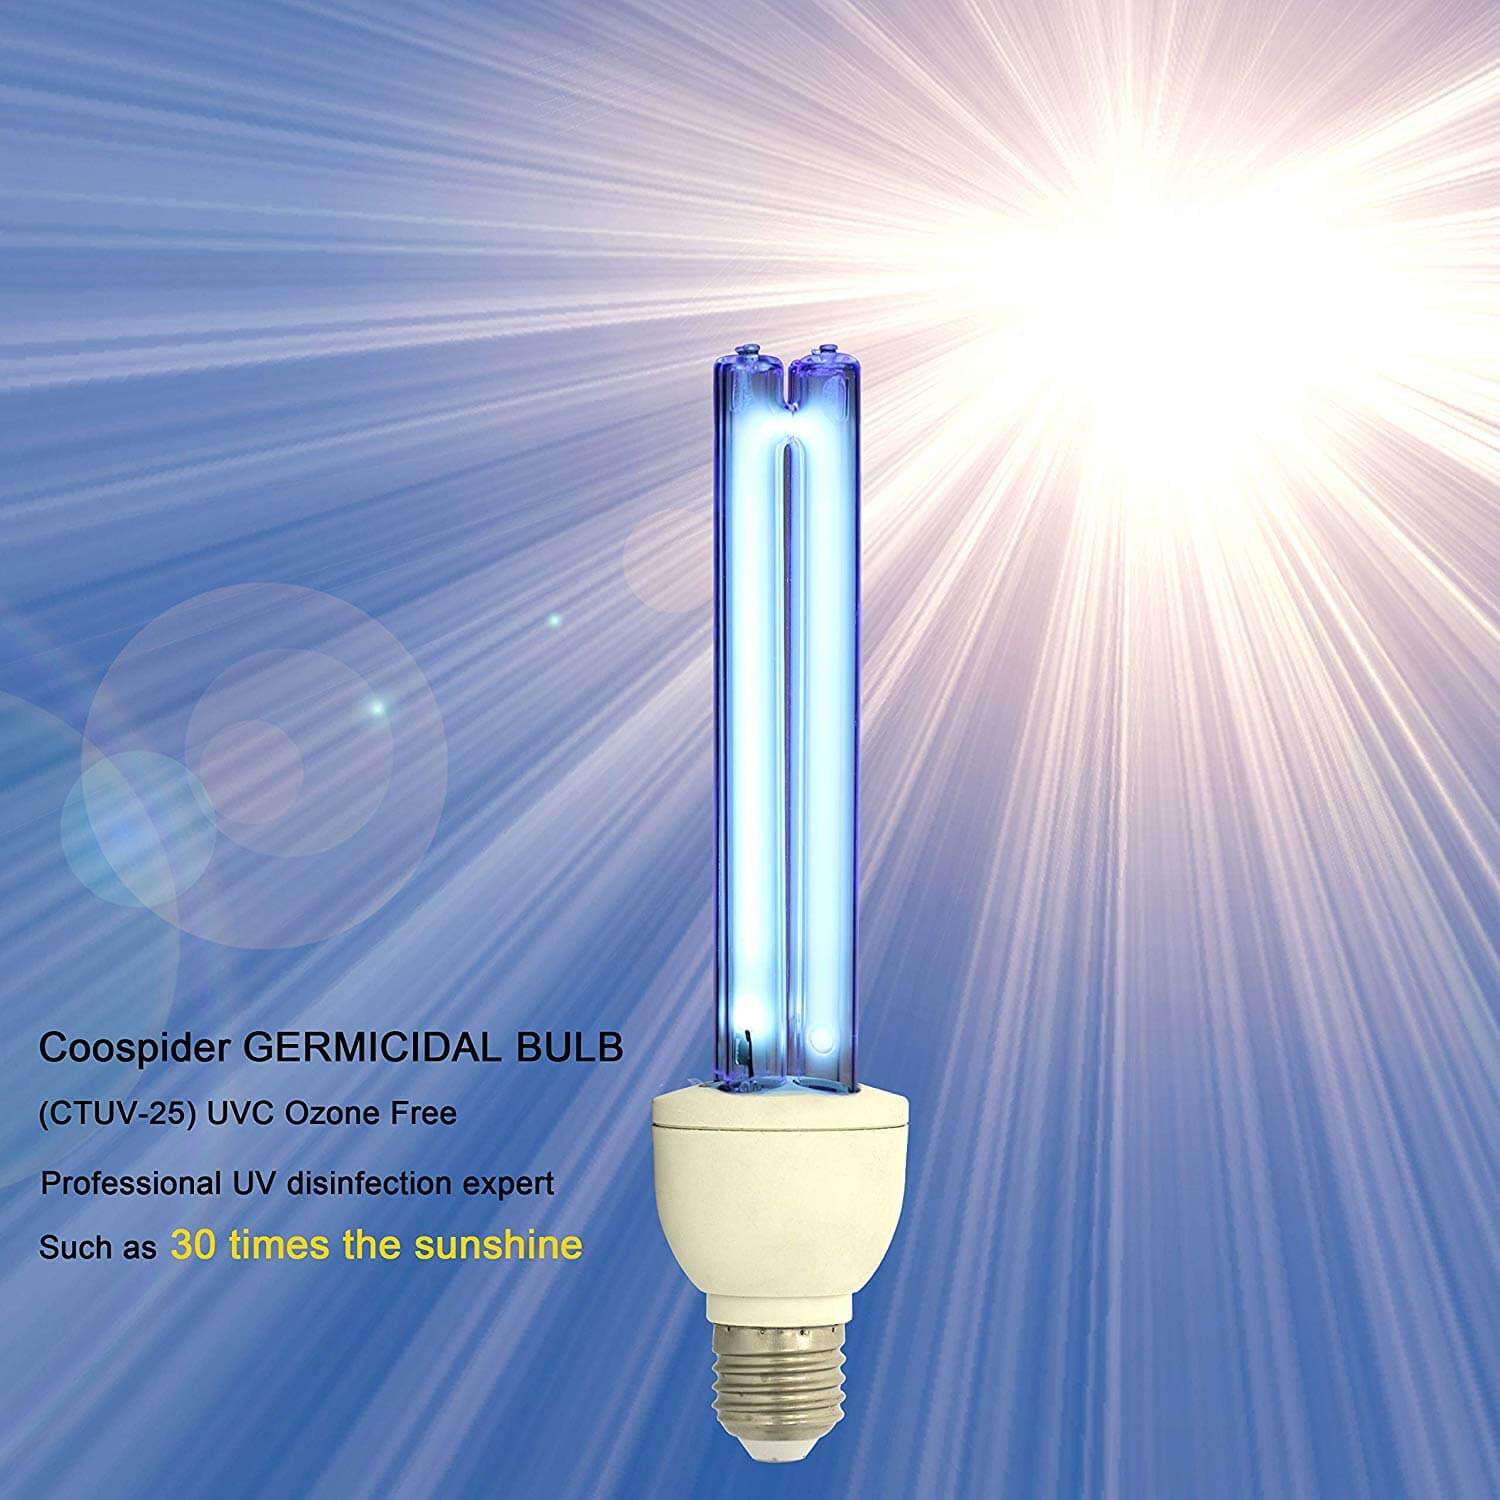 UV Germicidal Lamp Compact UVC Light Bulb E27 UVC Ozone Free (5)